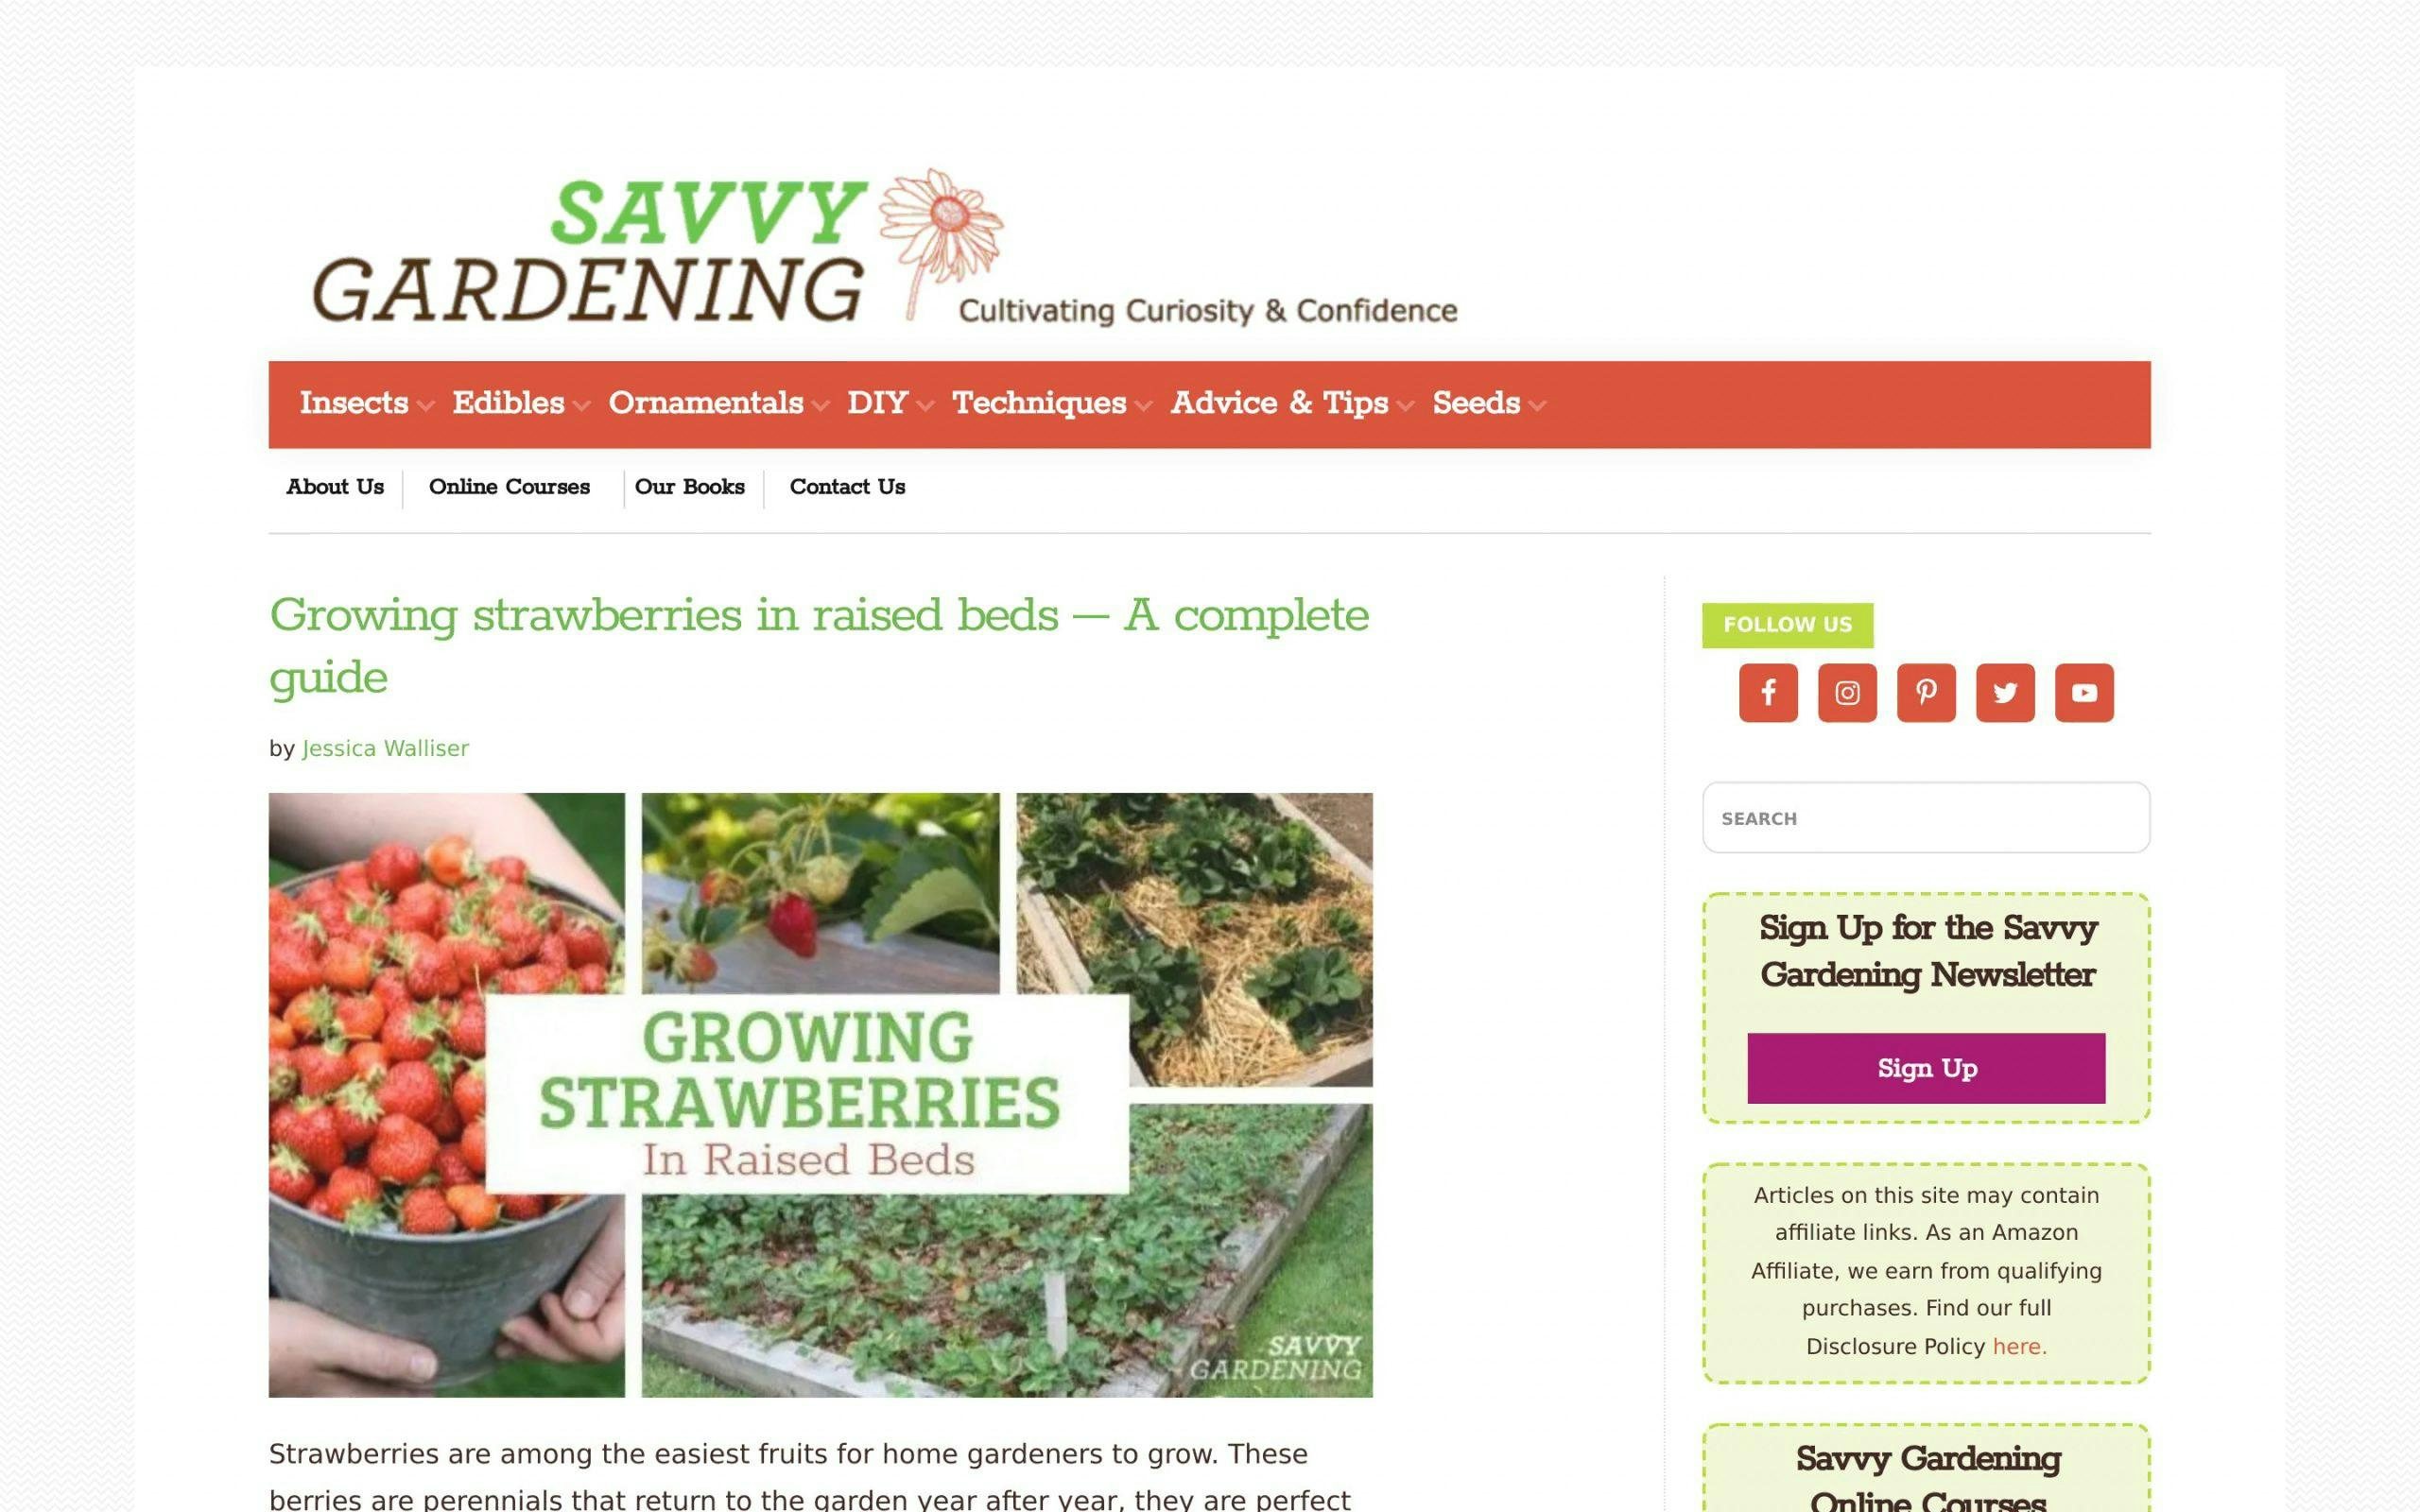 Savvy Gardening